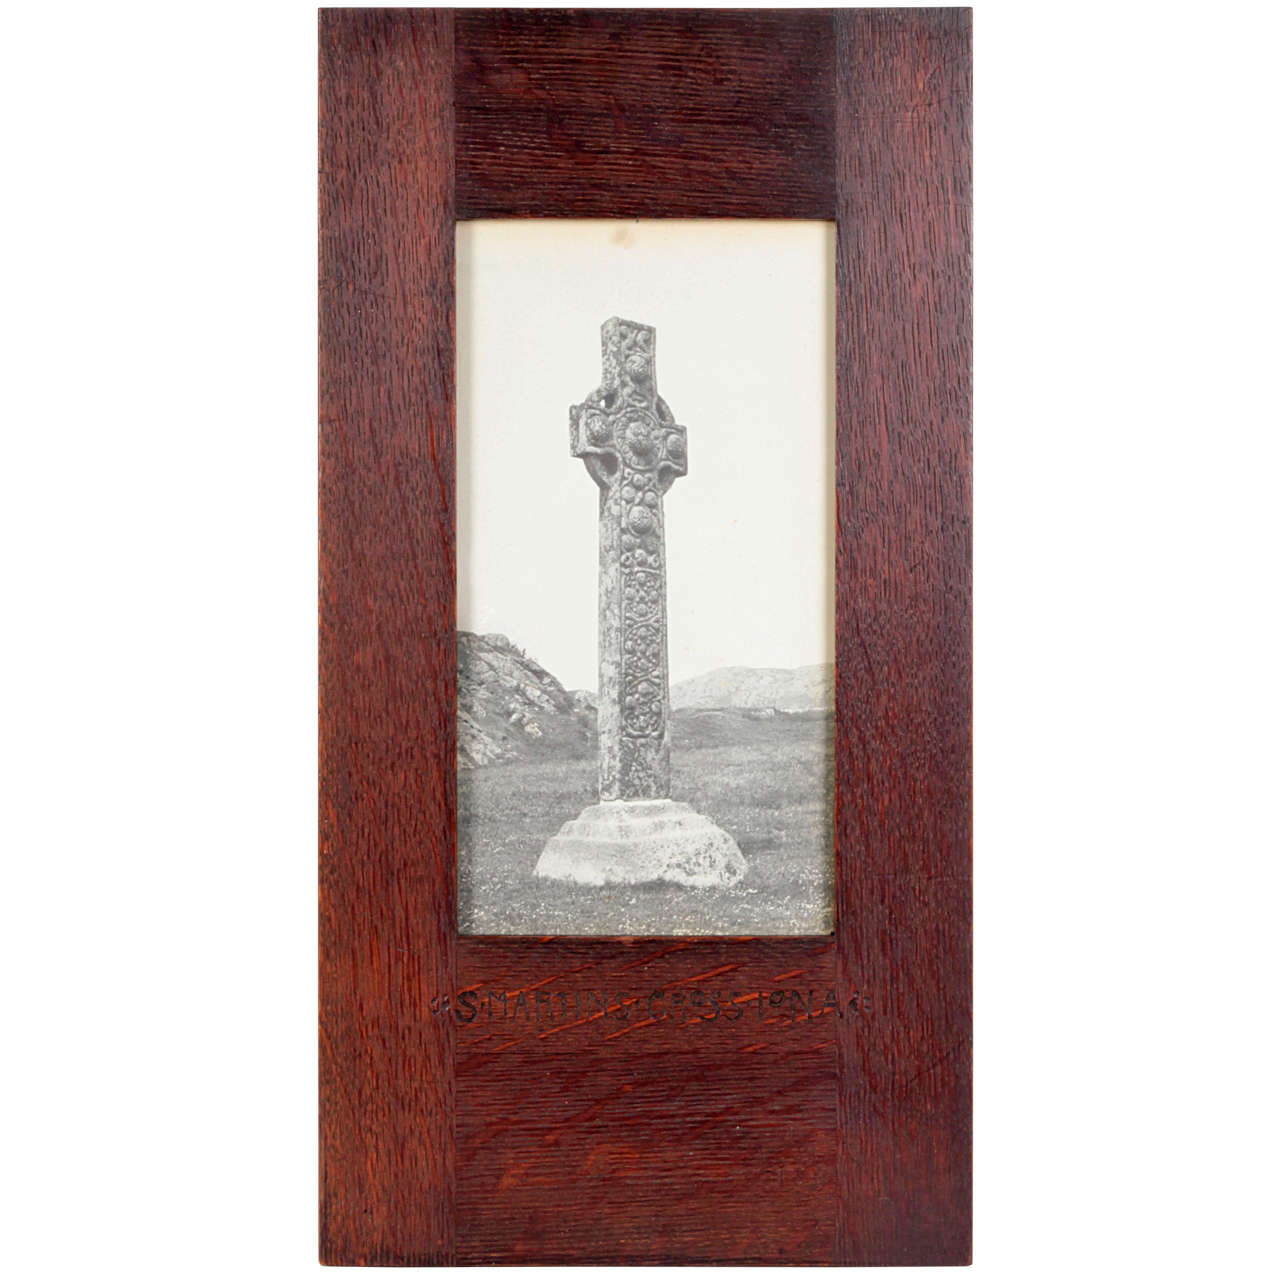 Sydney Pitcher "St. Martin's Cross Iona" Arts & Crafts photograph c. 1900 For Sale